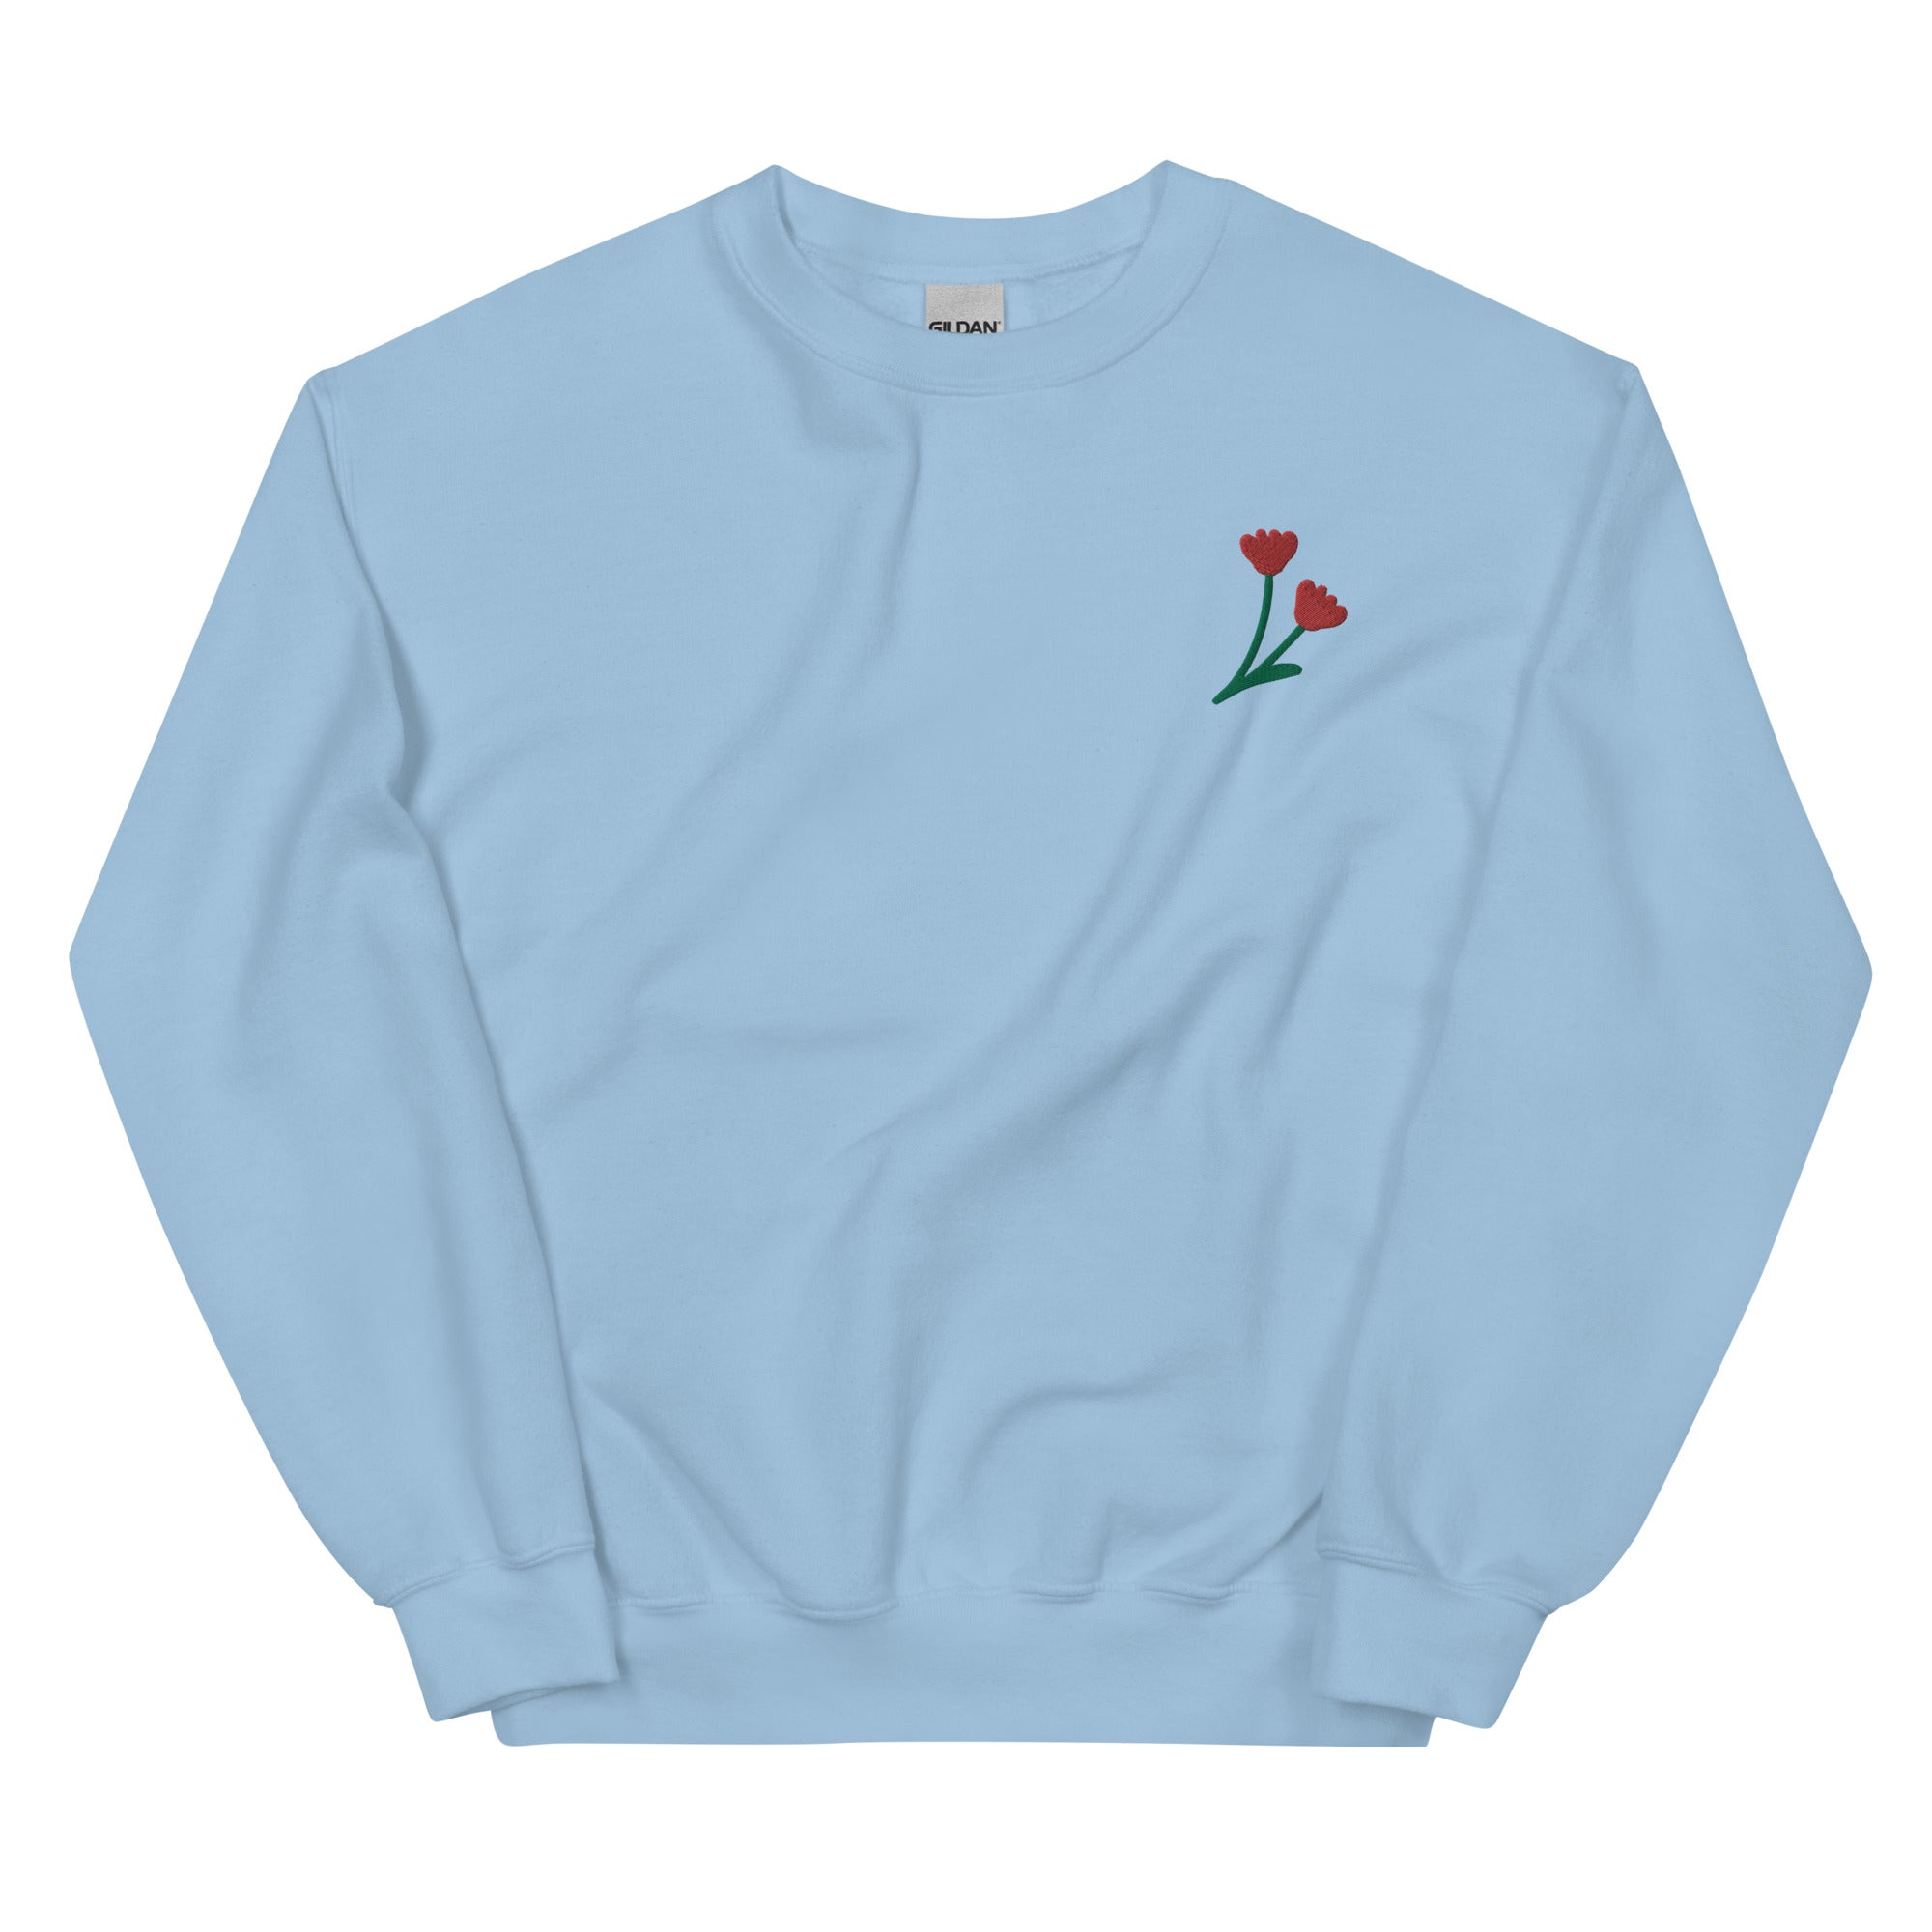 Happy Together Embroidered Flower Sweatshirt